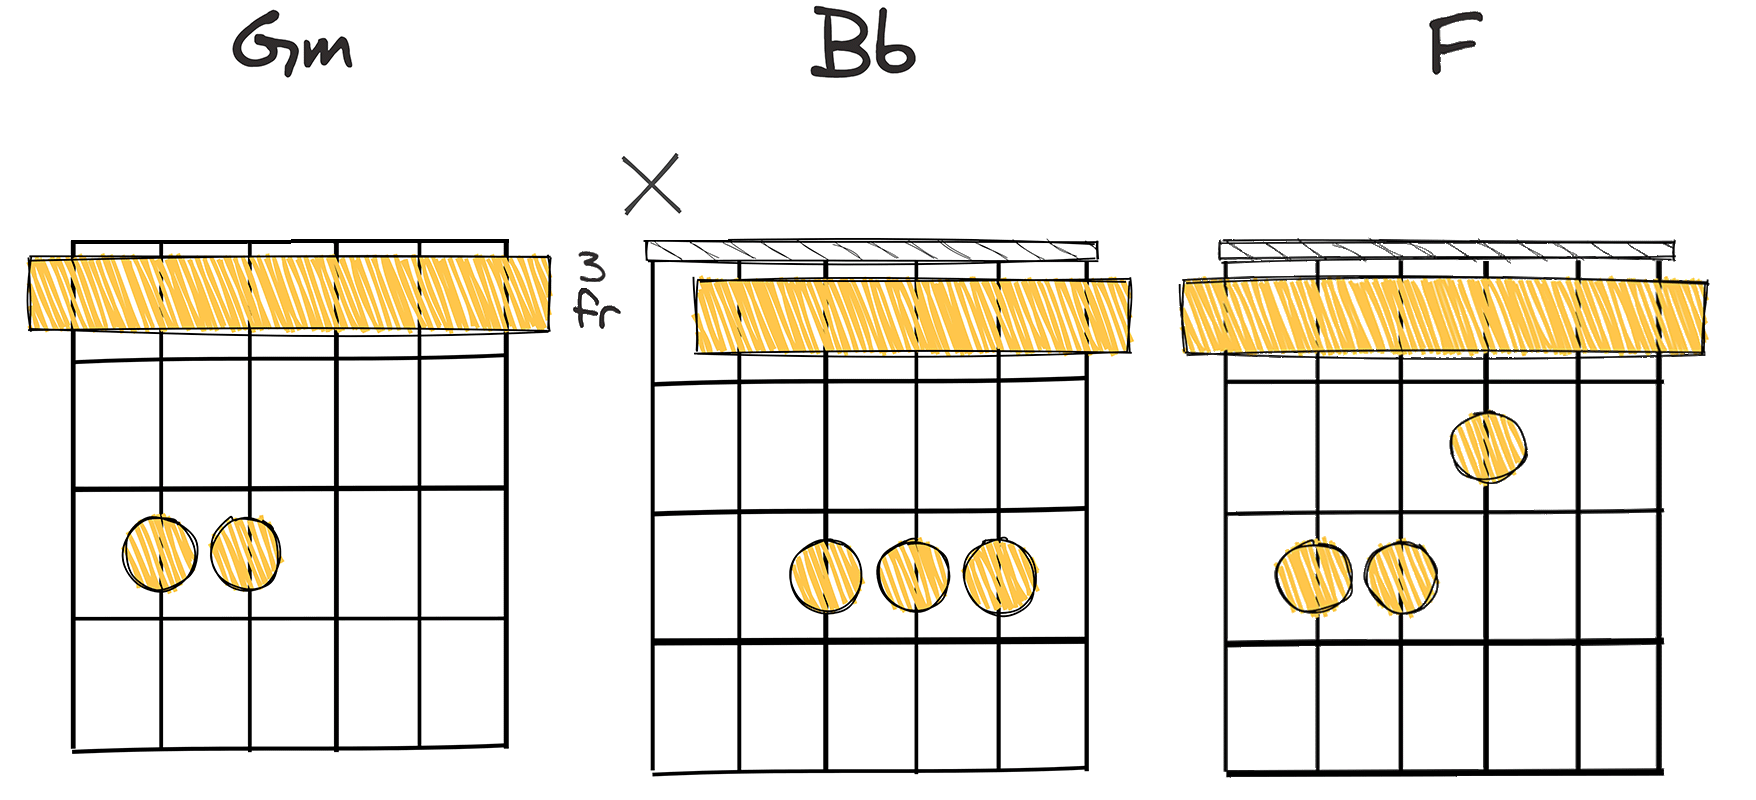 ii-IV-I (2-4-1) chords diagram